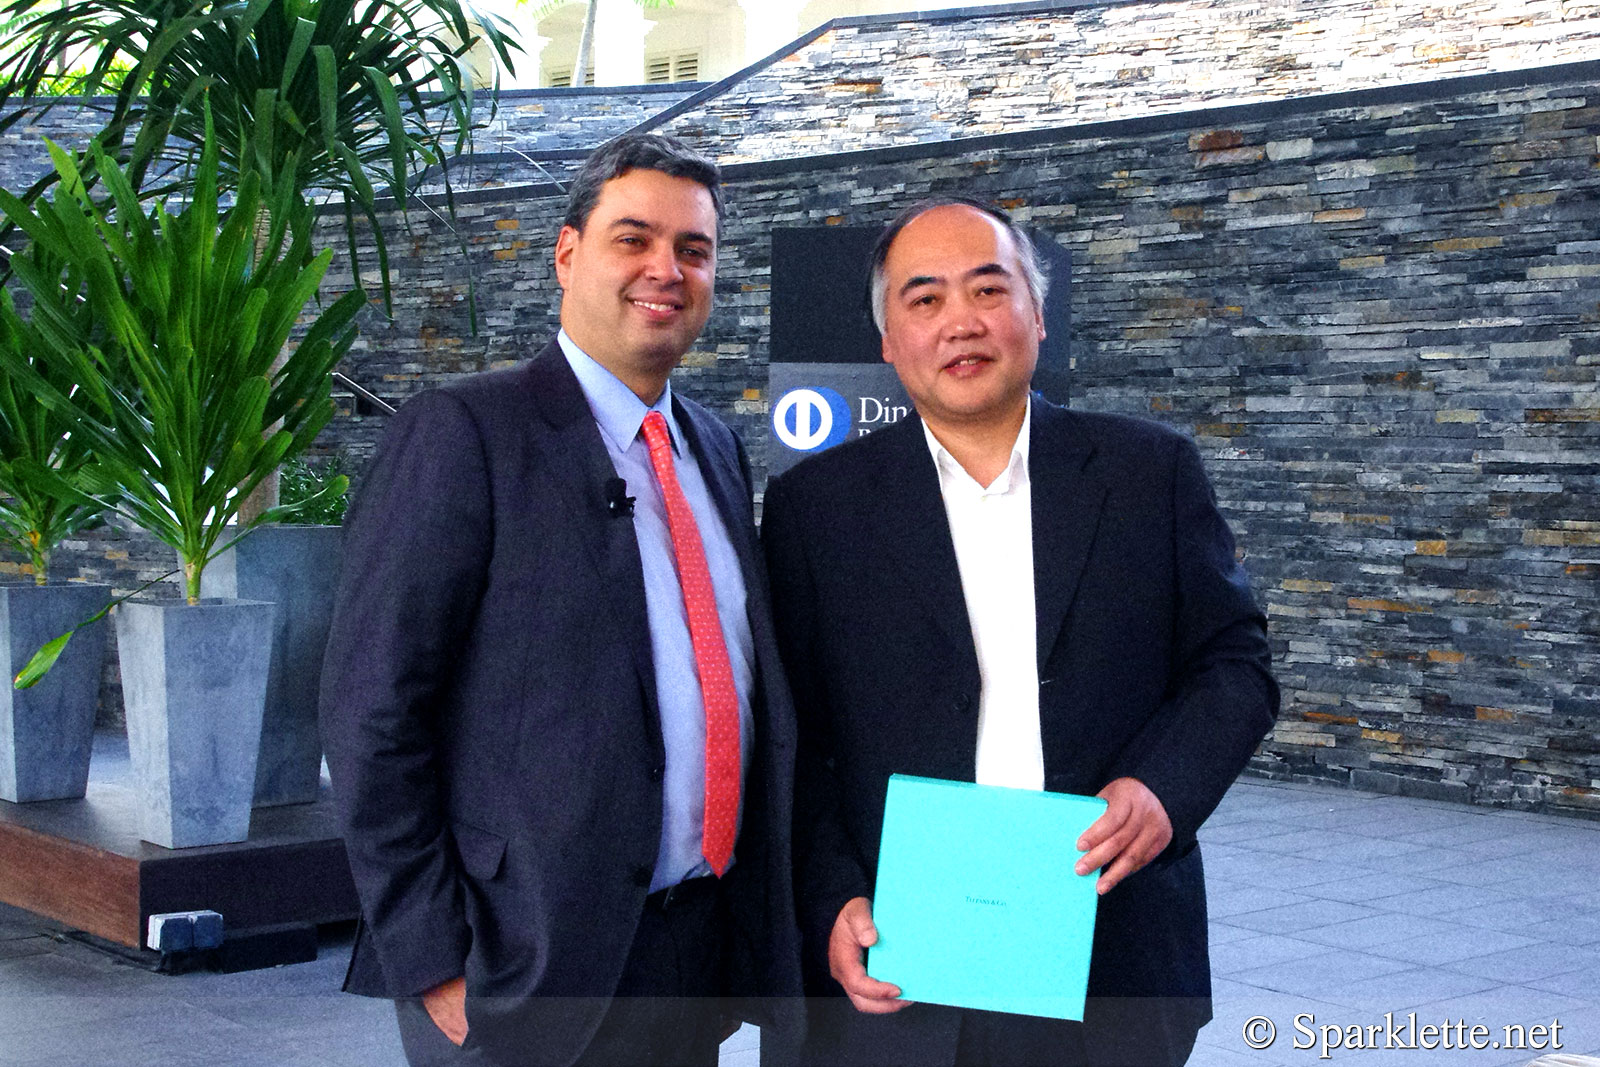 Eduardo Tobon, President of Diners Club International® with Chef Ivan Li of Family Li Imperial Cuisine